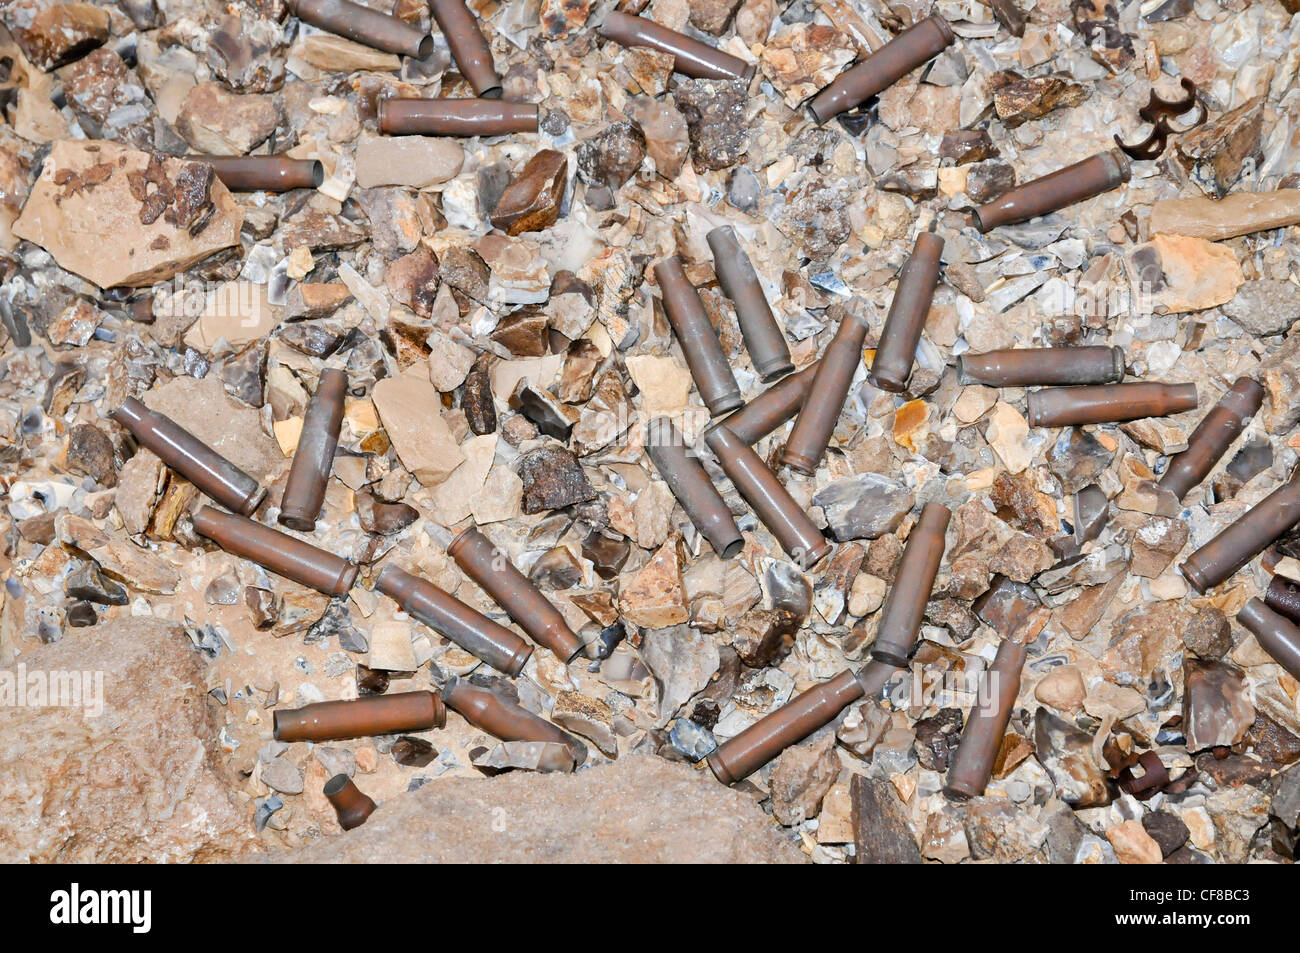 Israel, Aravaa pile of spent cartridges on the ground Stock Photo